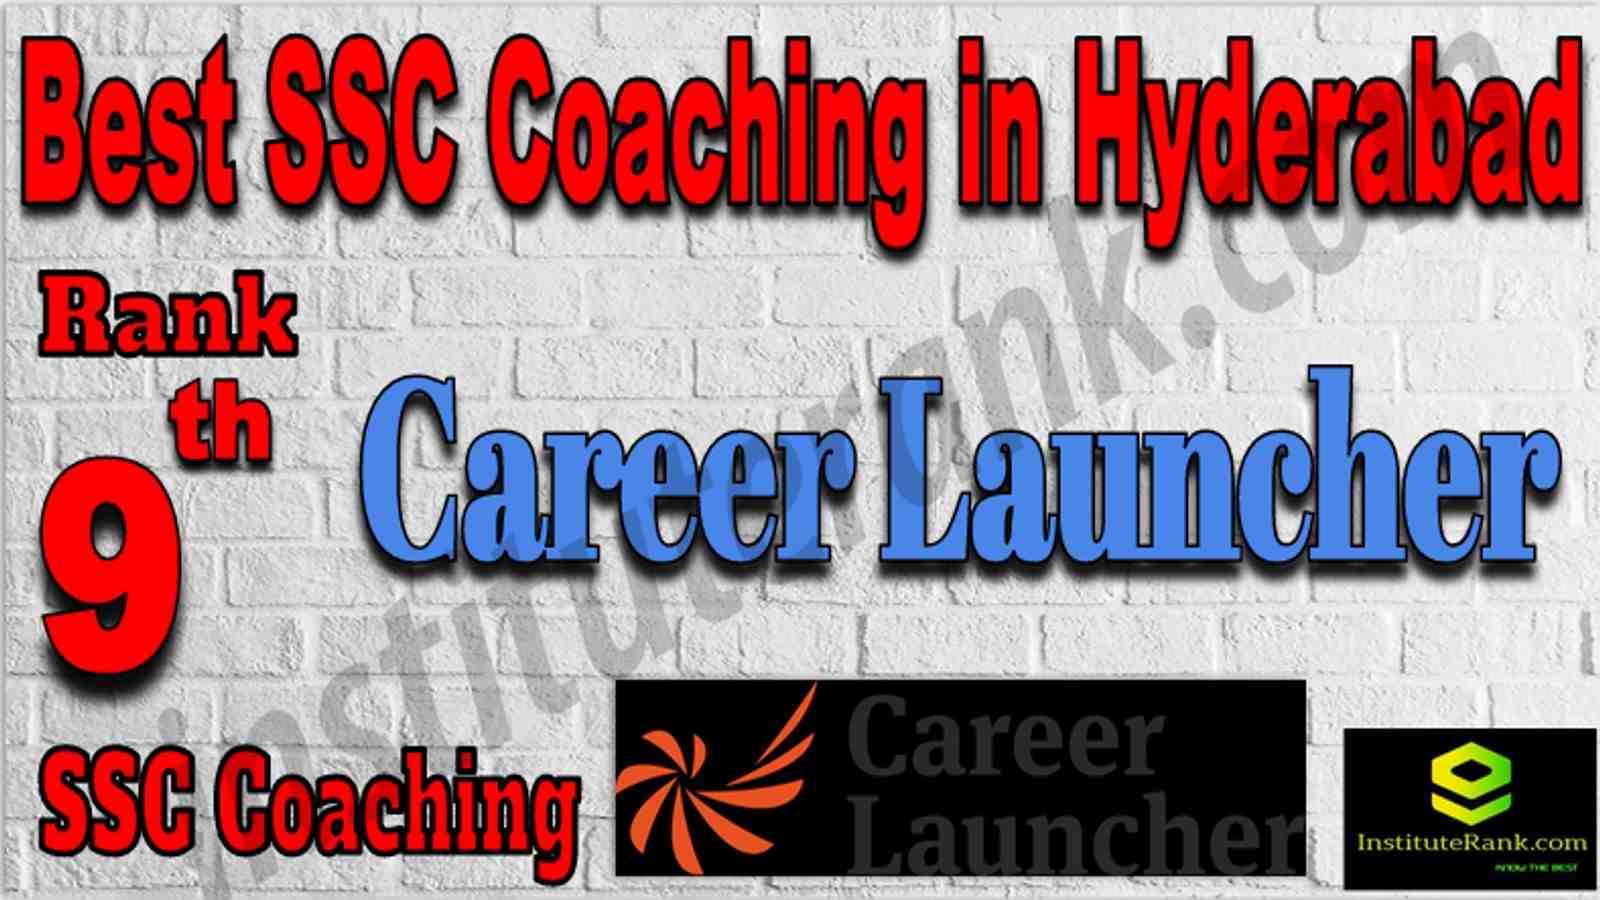 Rank 9 Best SSC Coaching in Hyderabad